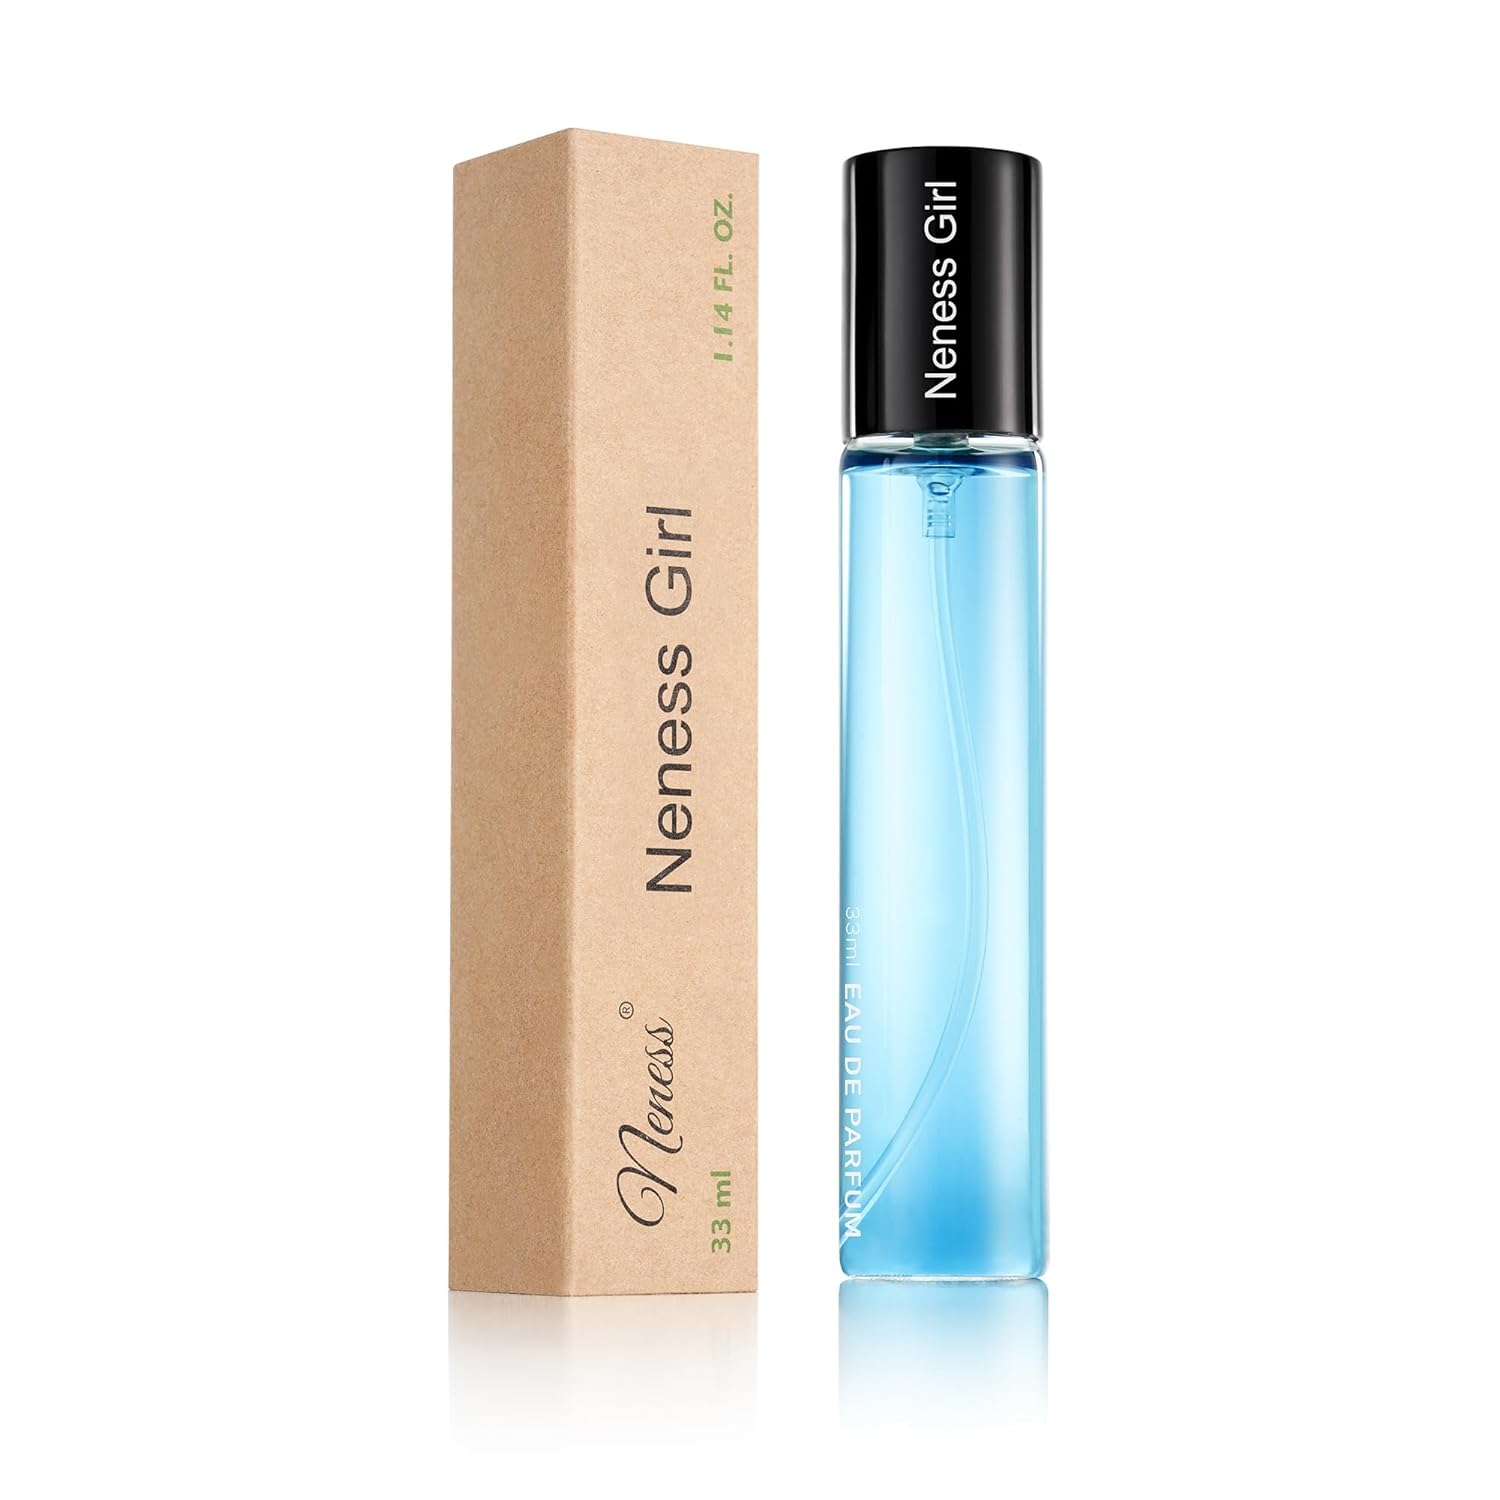 Neness Girl Women\'s Perfume, Eau de Parfum, Bold and Feminine Fragrance for Any Occasion, 33 ml